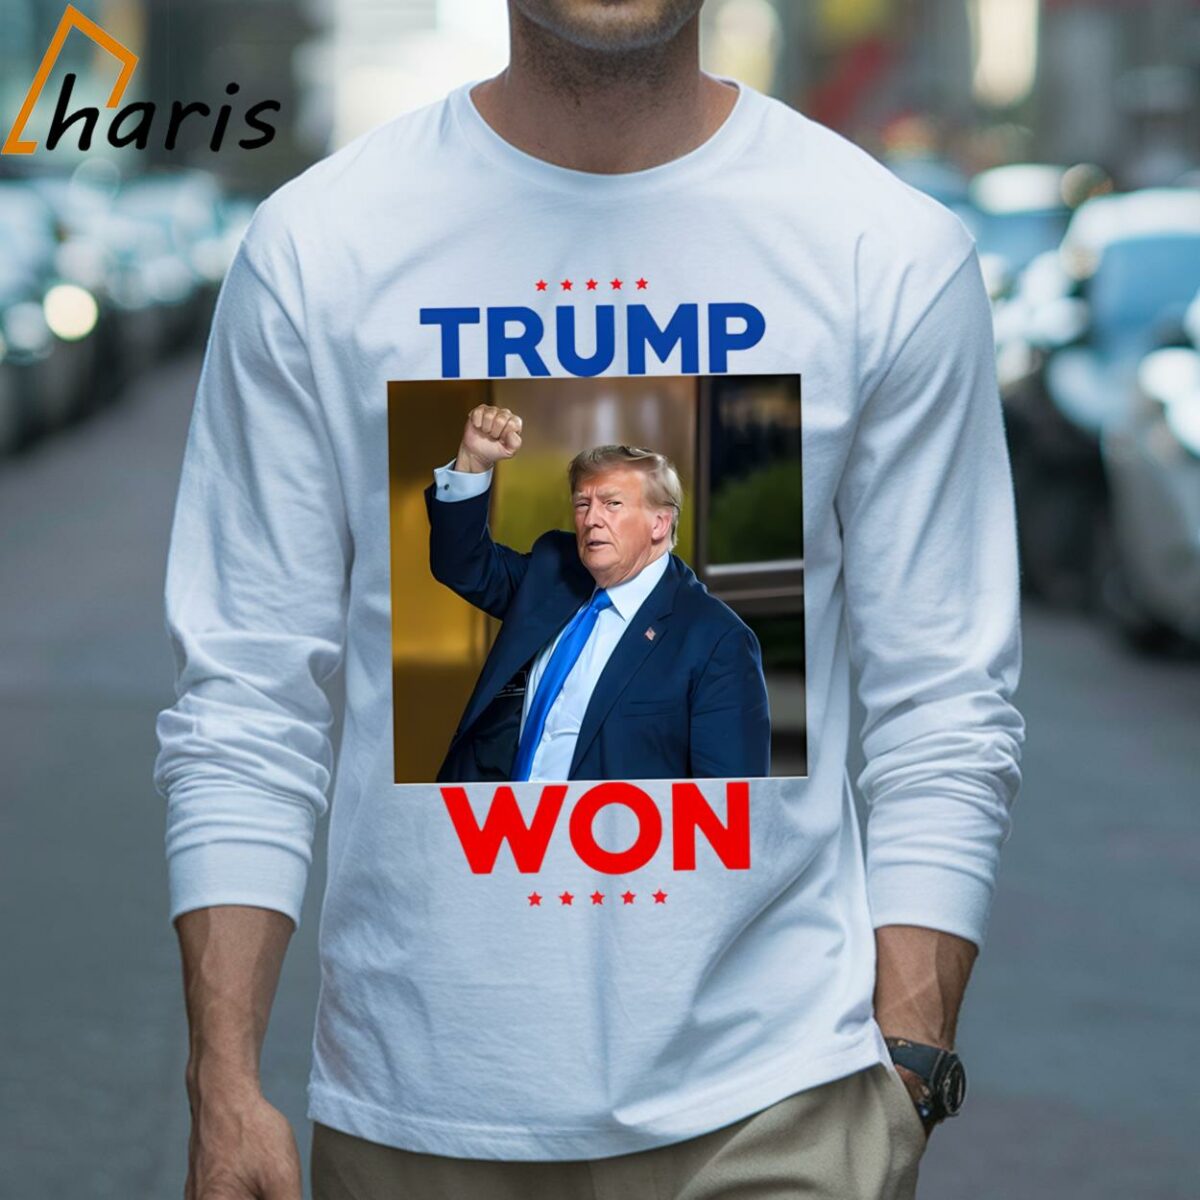 Travis Kelce Wearing Trump Won Shirt 3 Long sleeve shirt